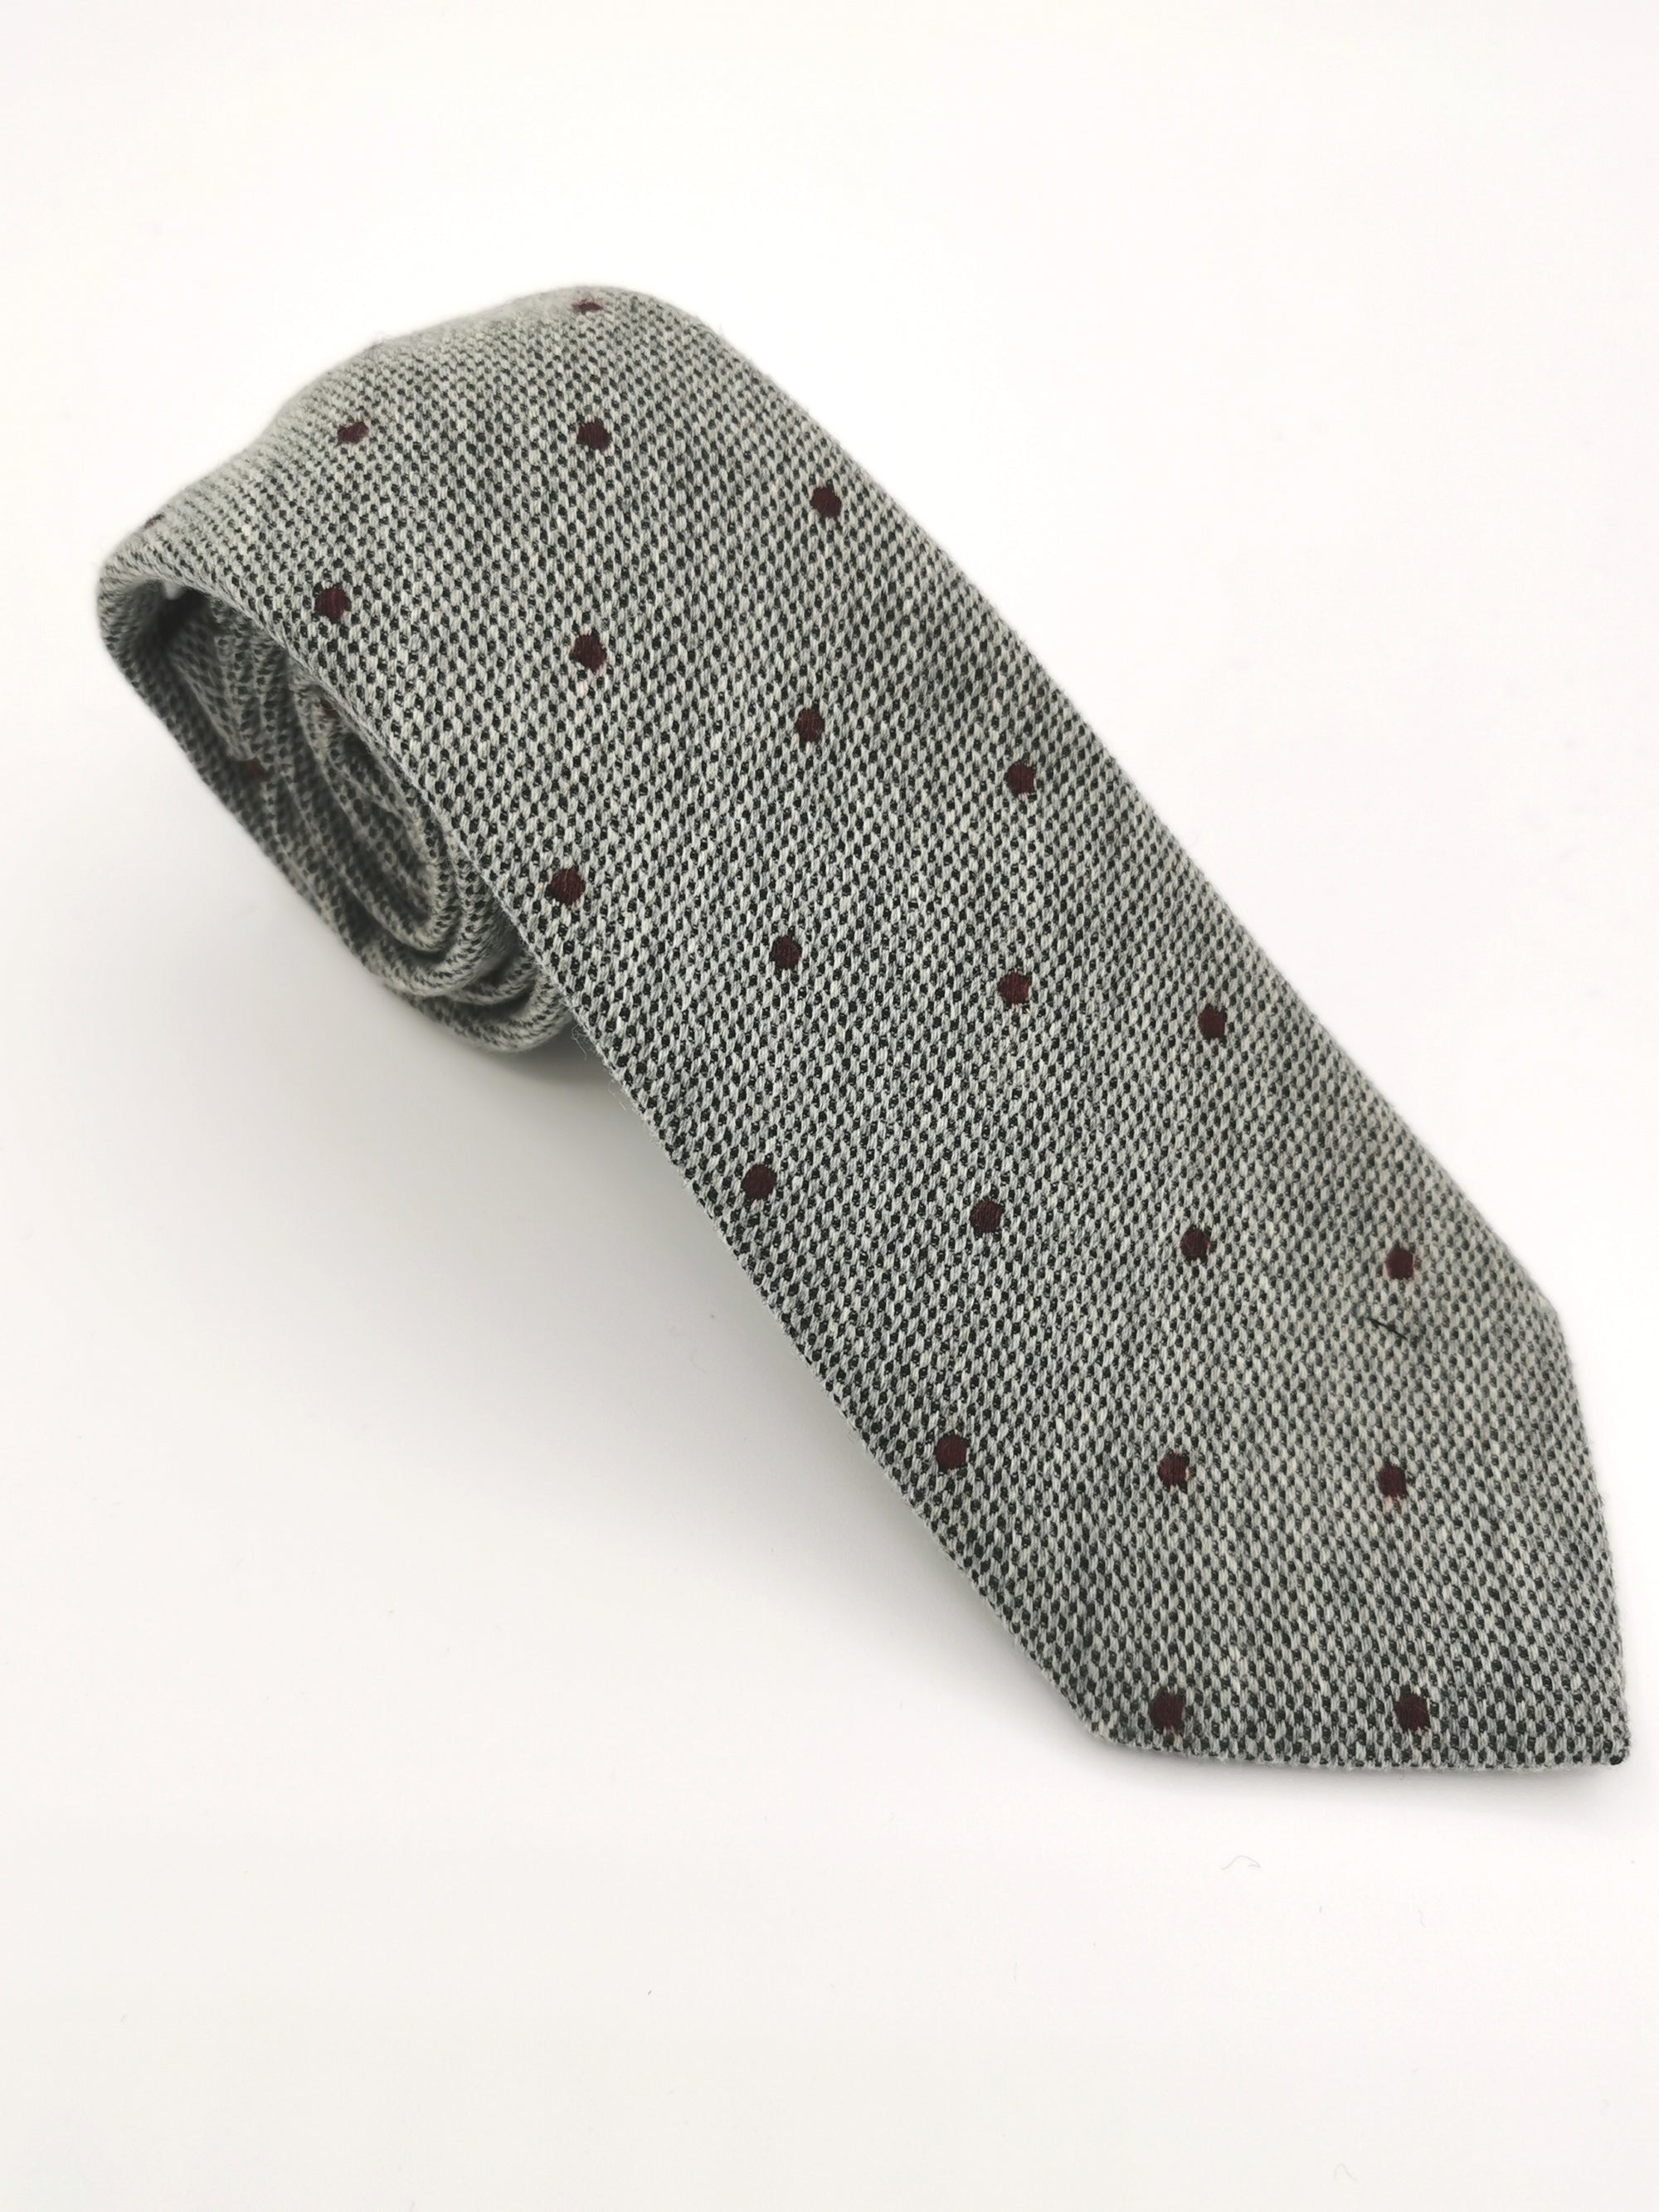 Ferala cashmere/silk tie with burgundy dots